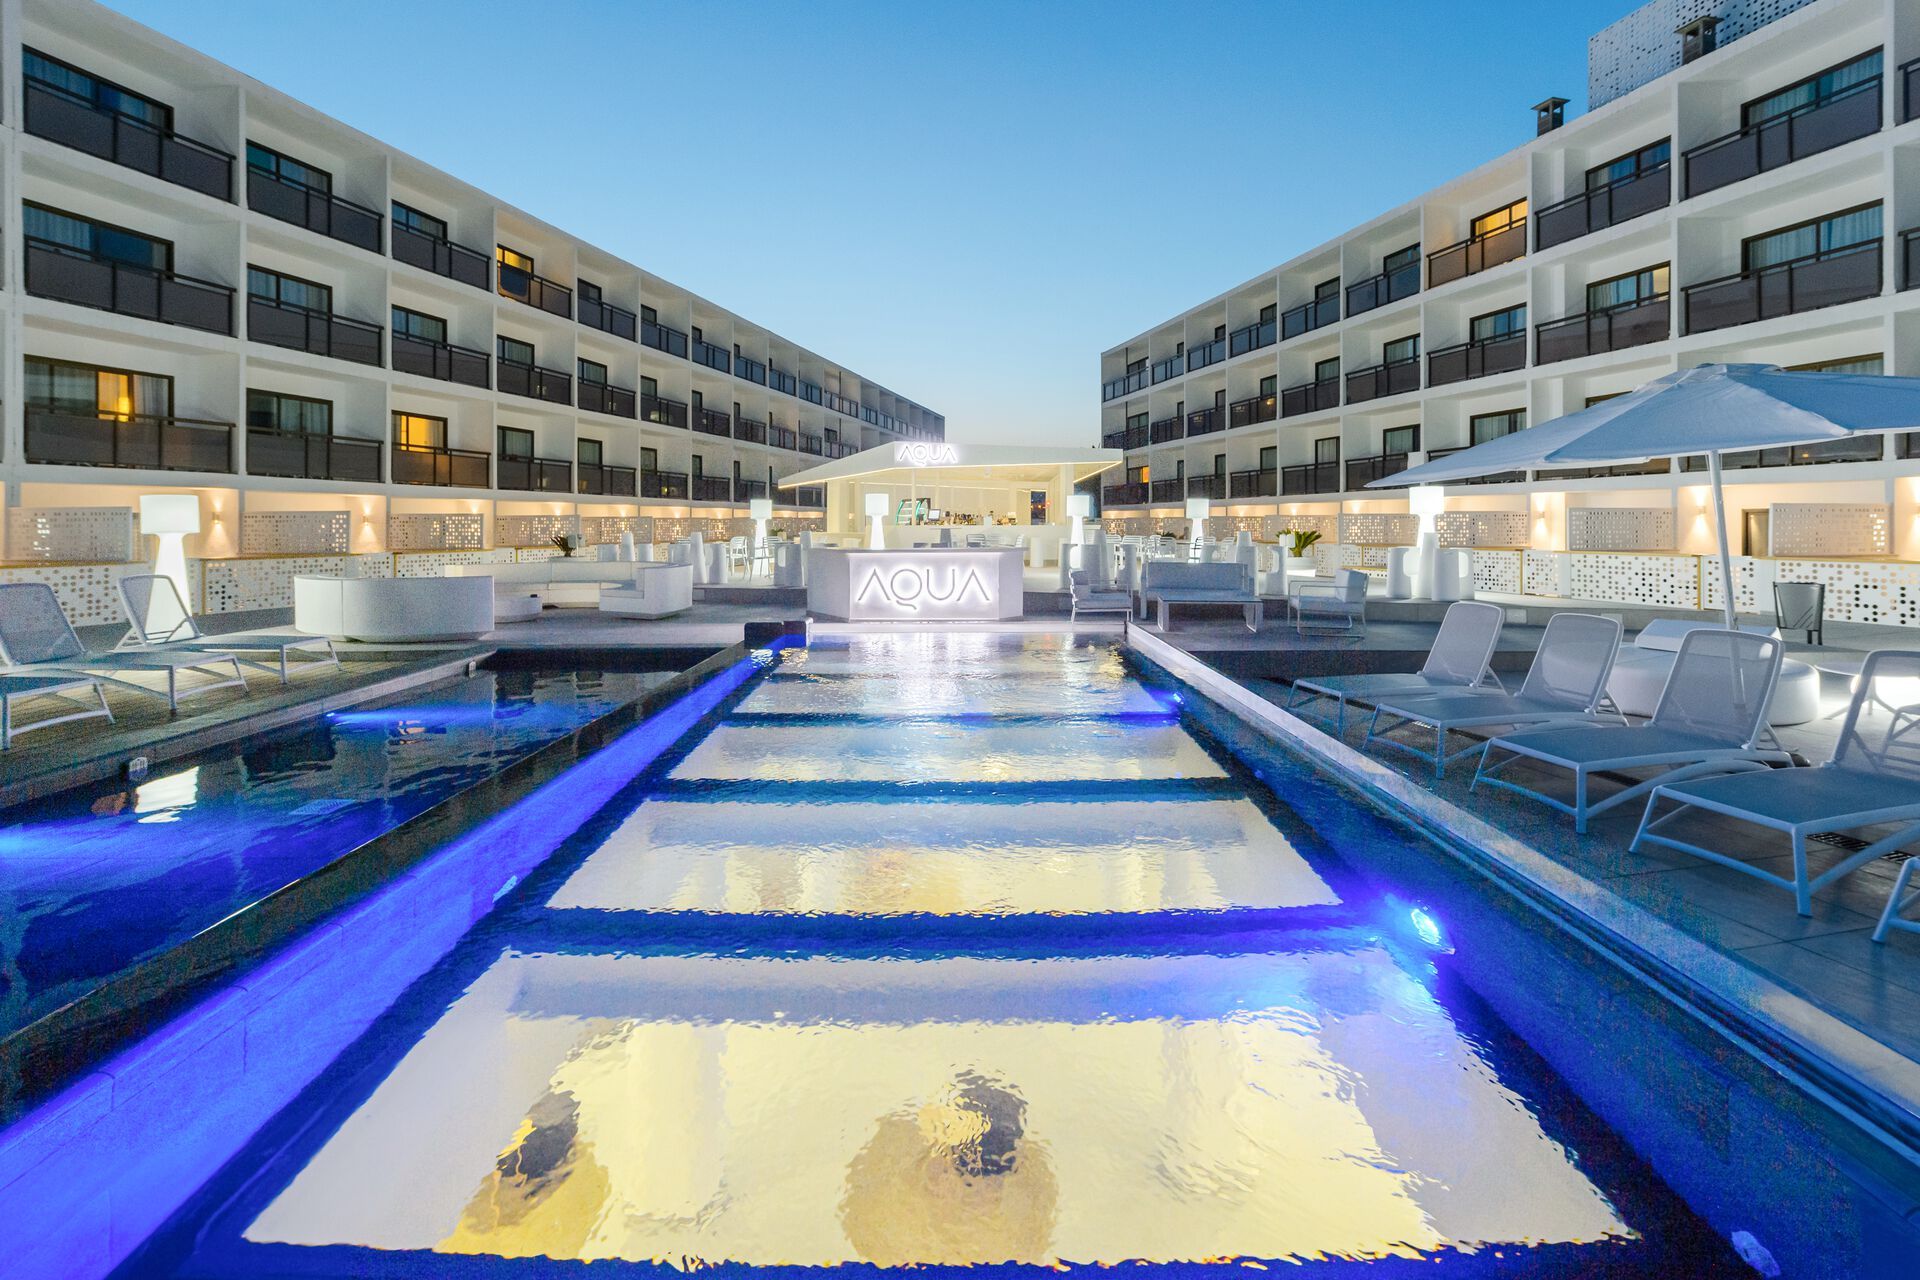 Baléares - Ibiza - Espagne - Hôtel Vibra Mare Nostrum 3*